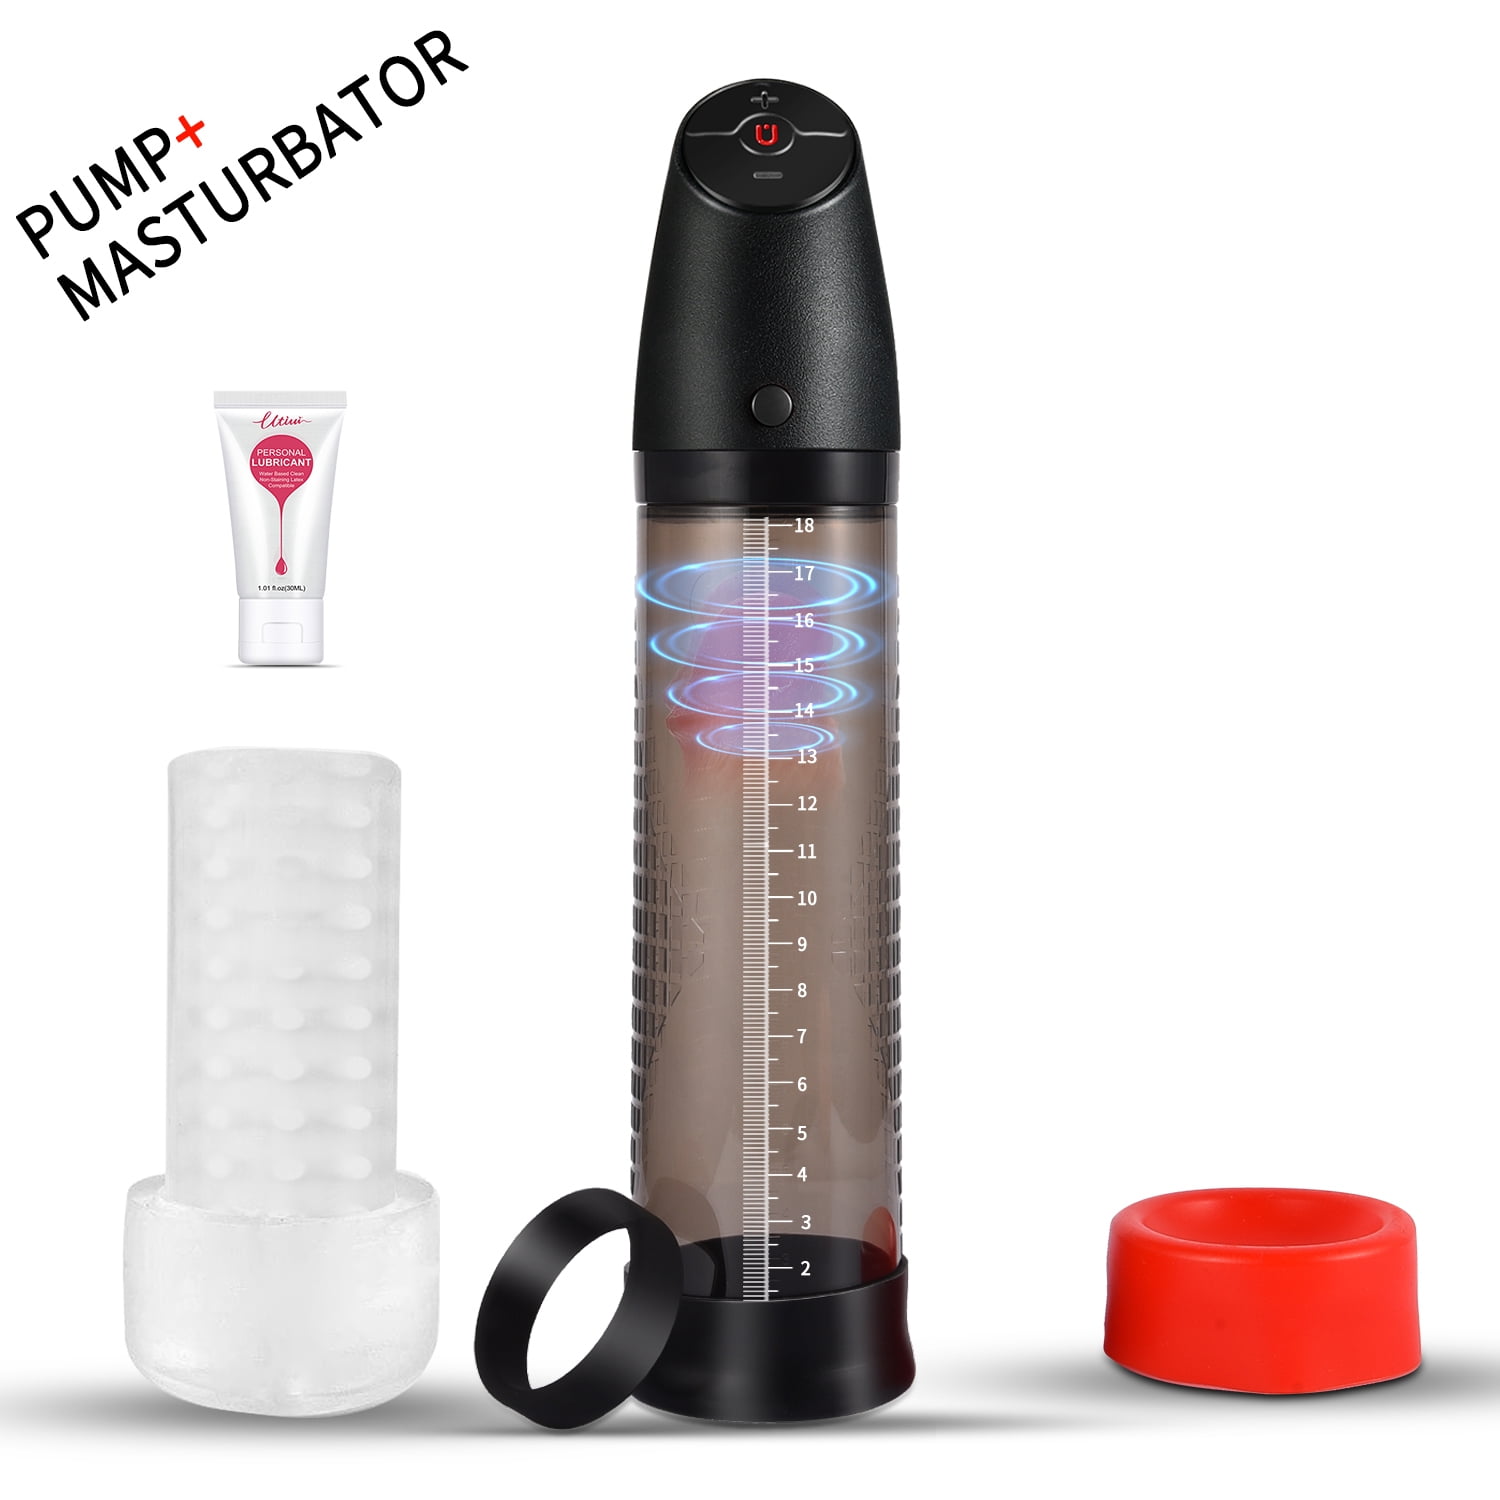 Electric Penis Vacuum Pump 2-in-1 Penis Pump Rechargeable Enlarger Pump Erection Pump for Penis Enlargement pic